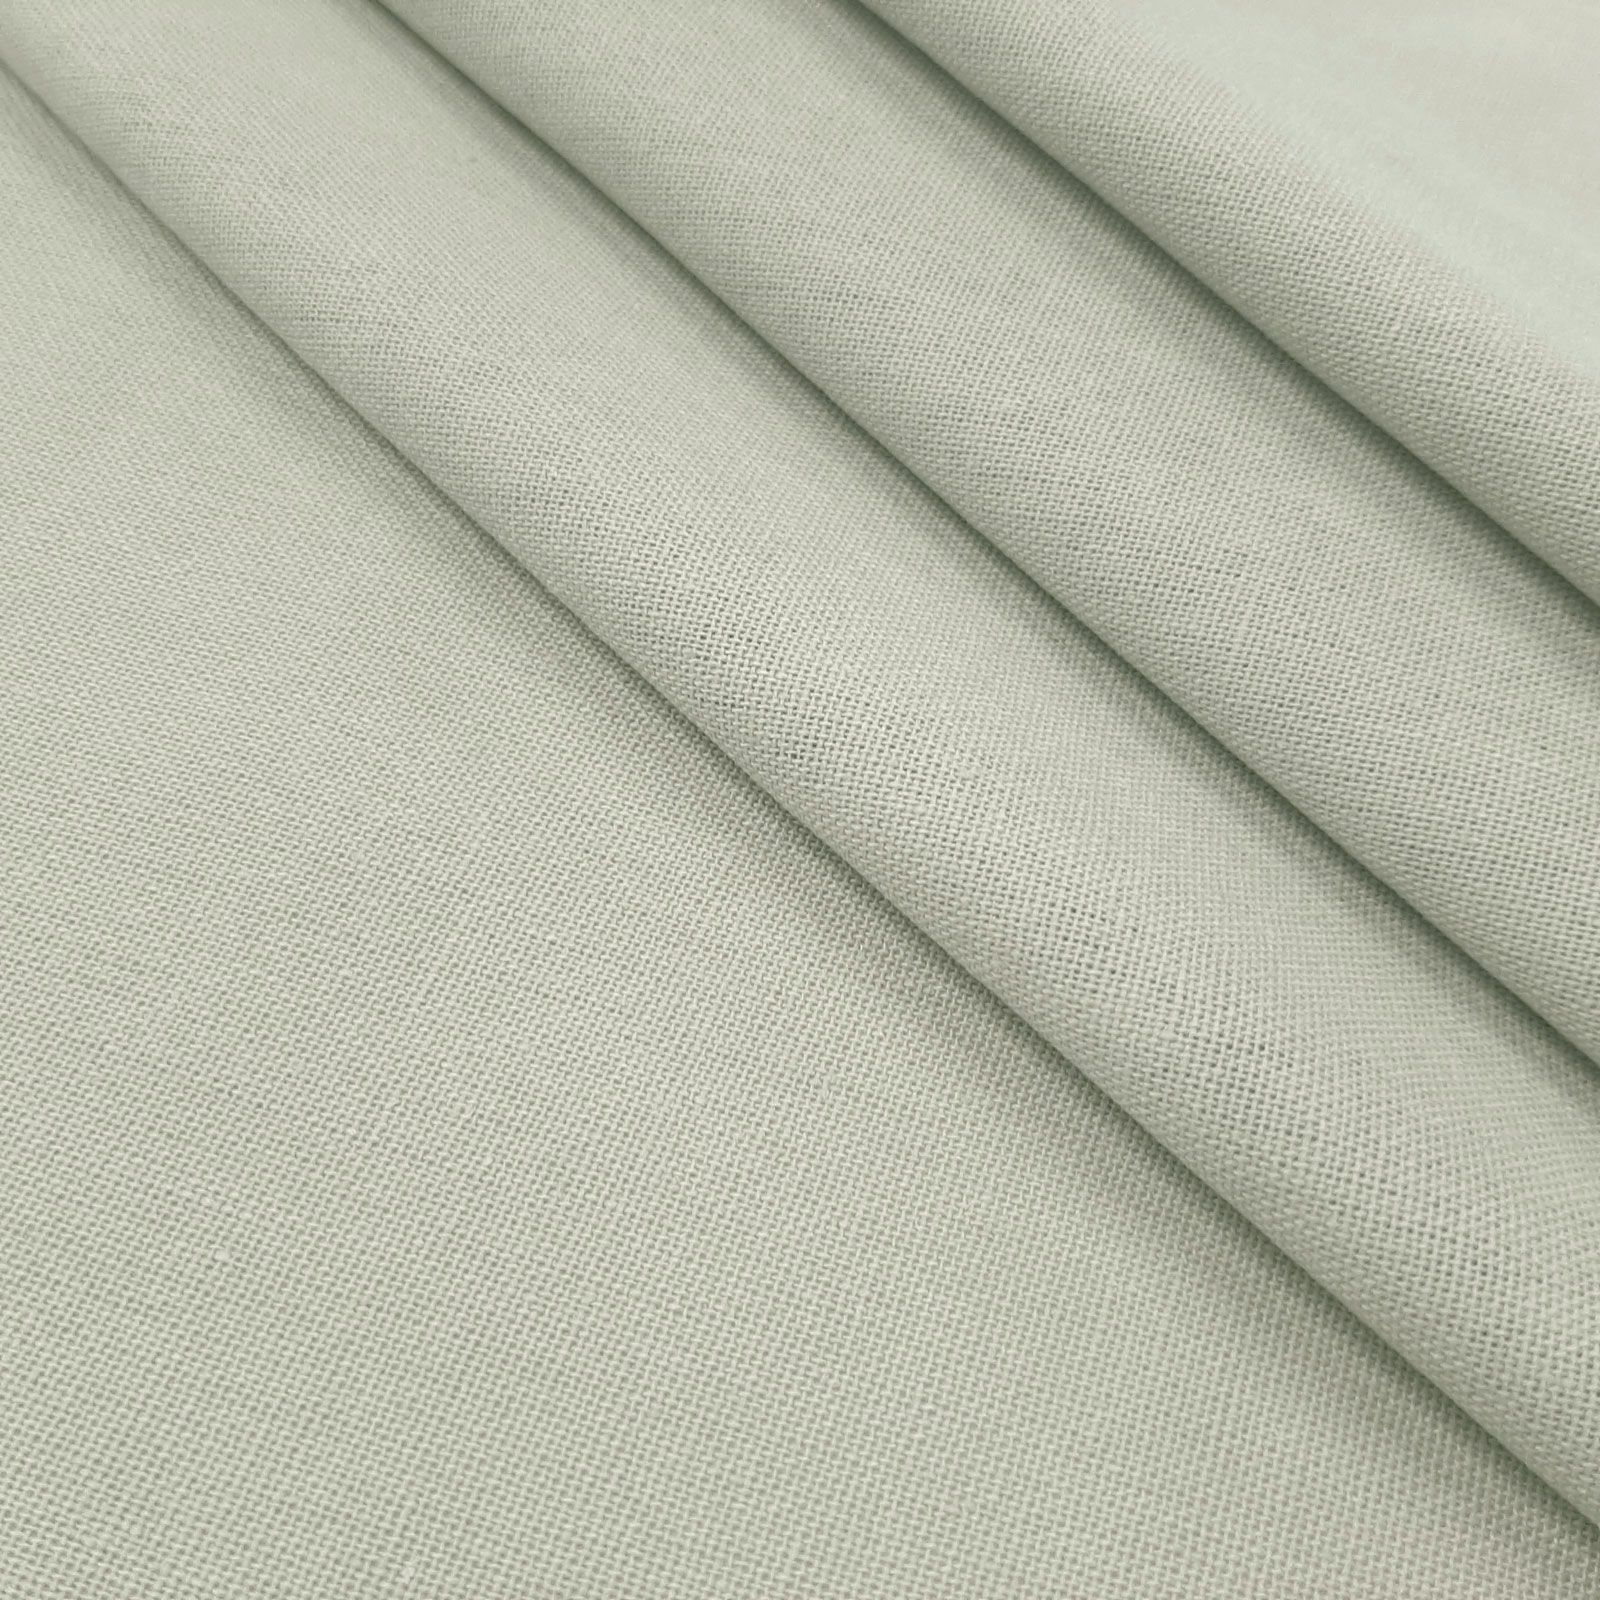 Bella - natural linen cotton fabric - Light Grey